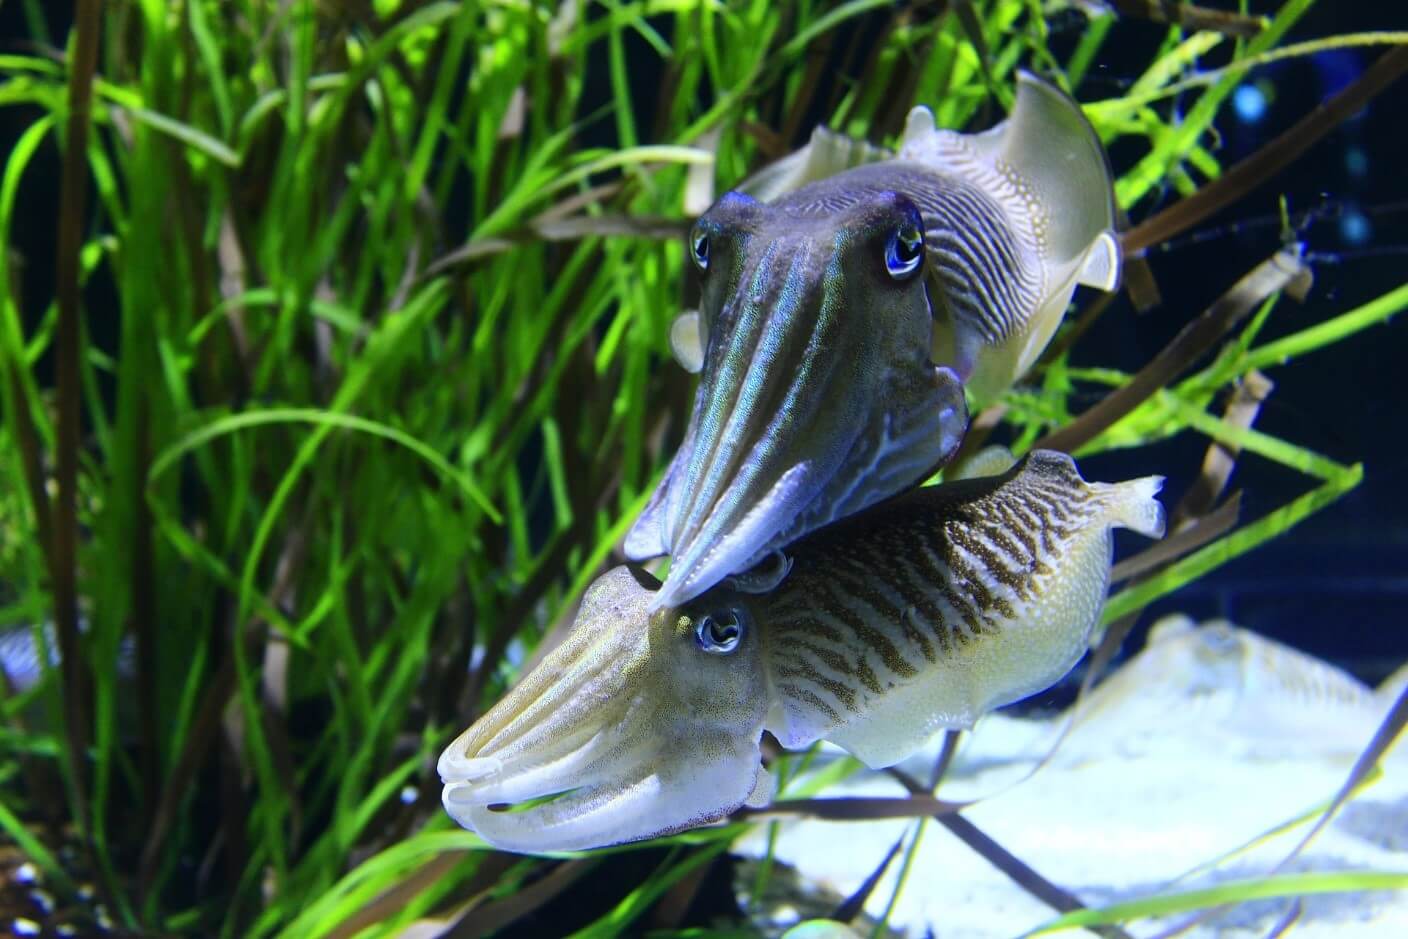 Weird fish in the ocean